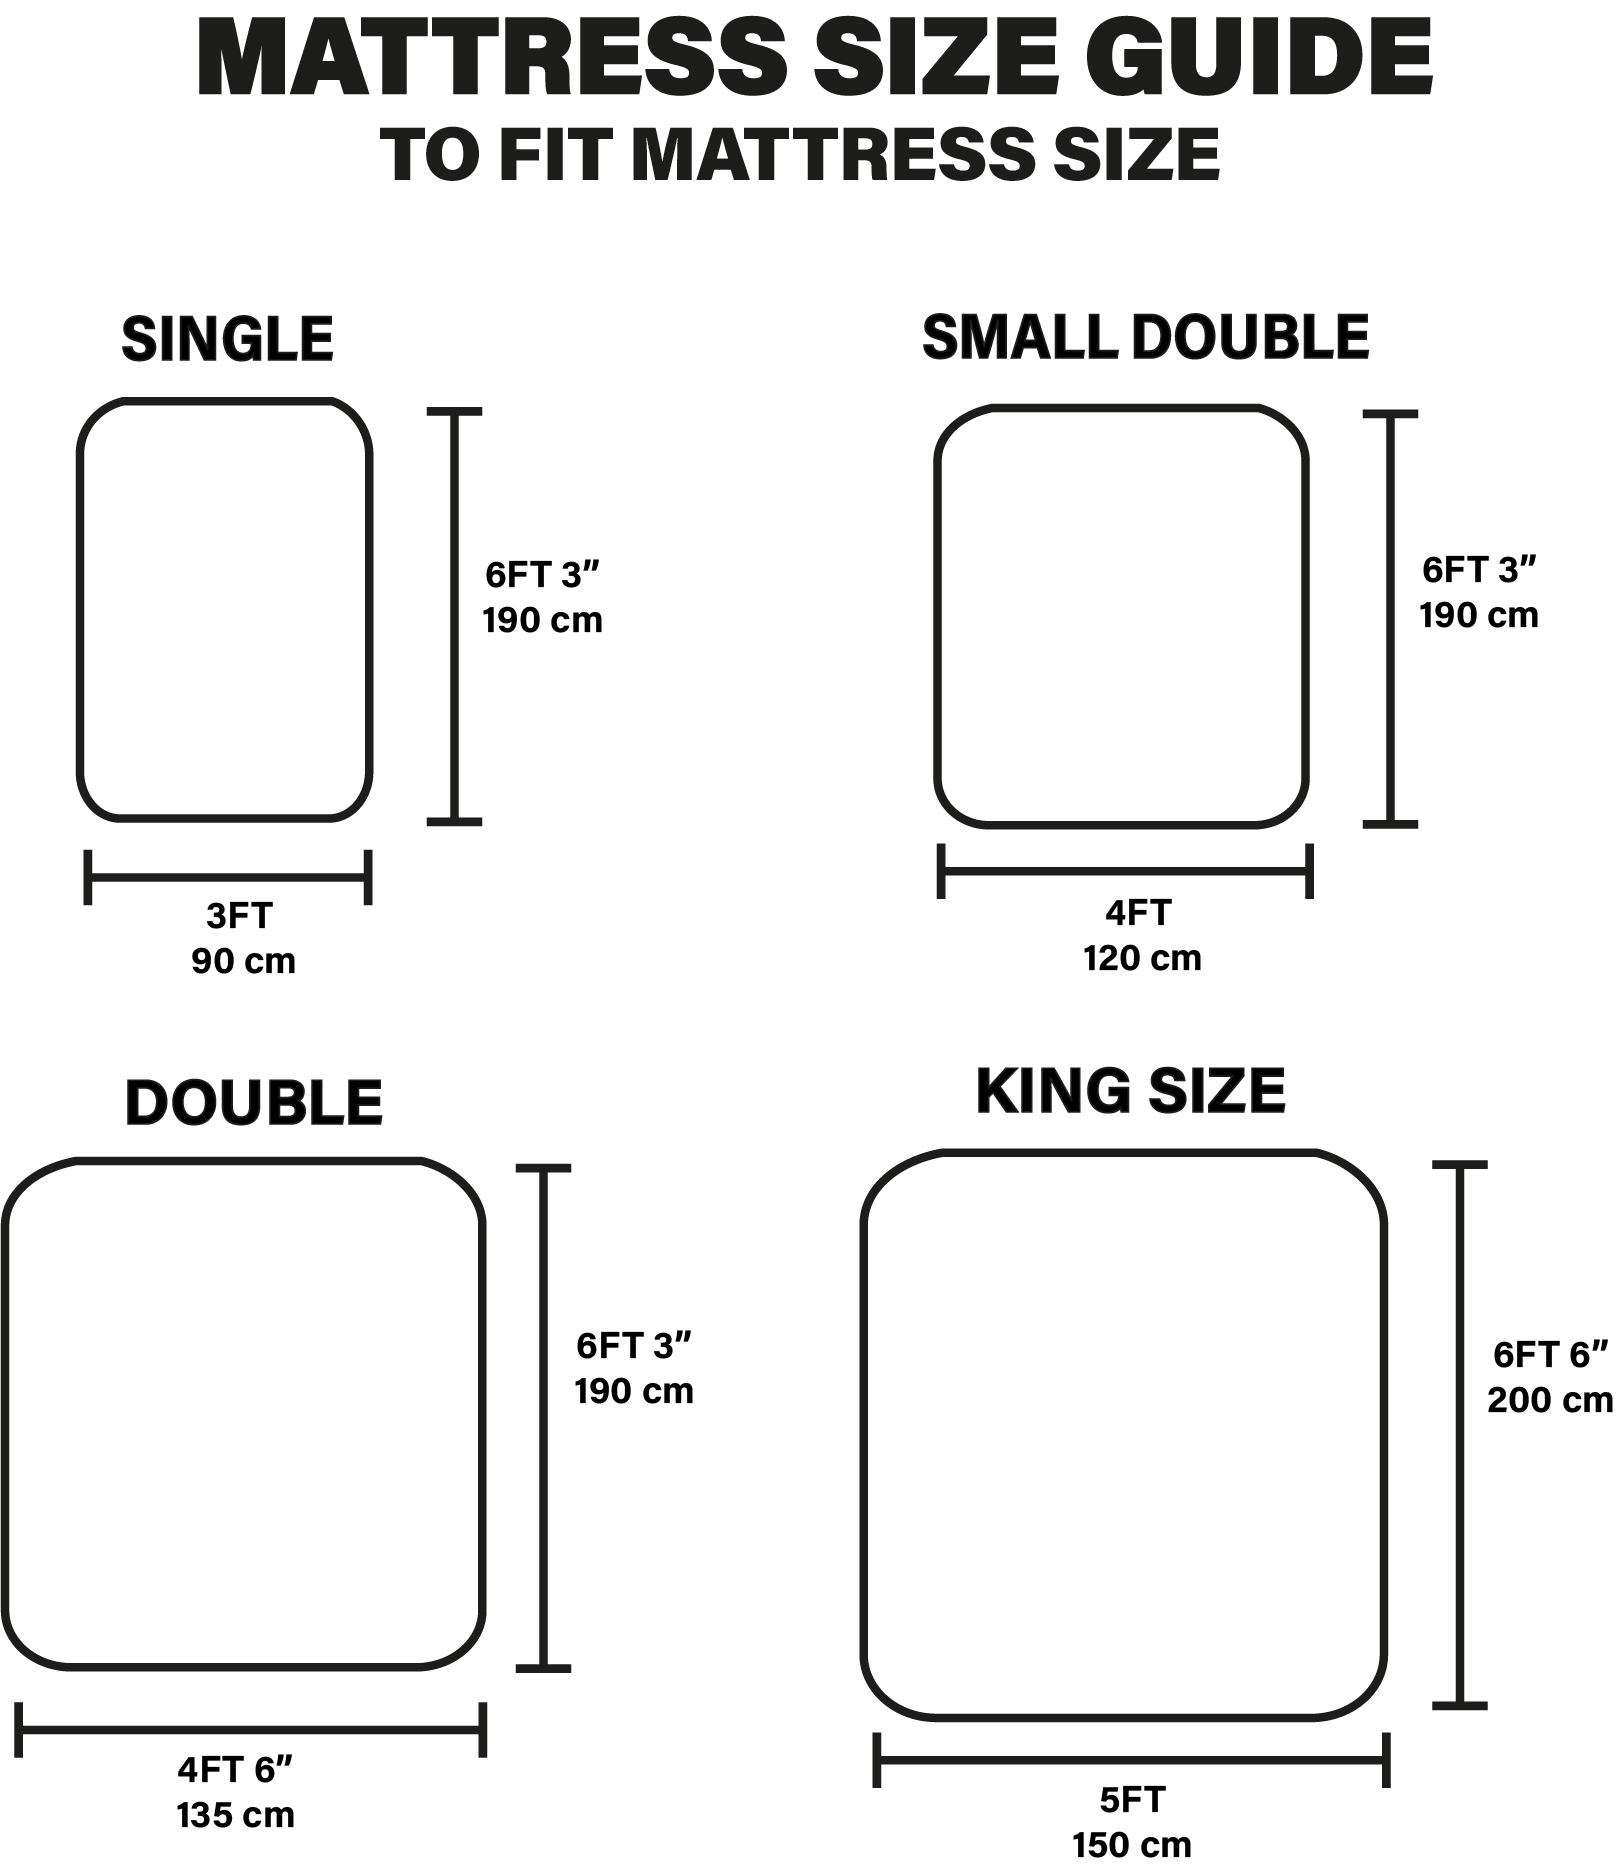 mattress size guide